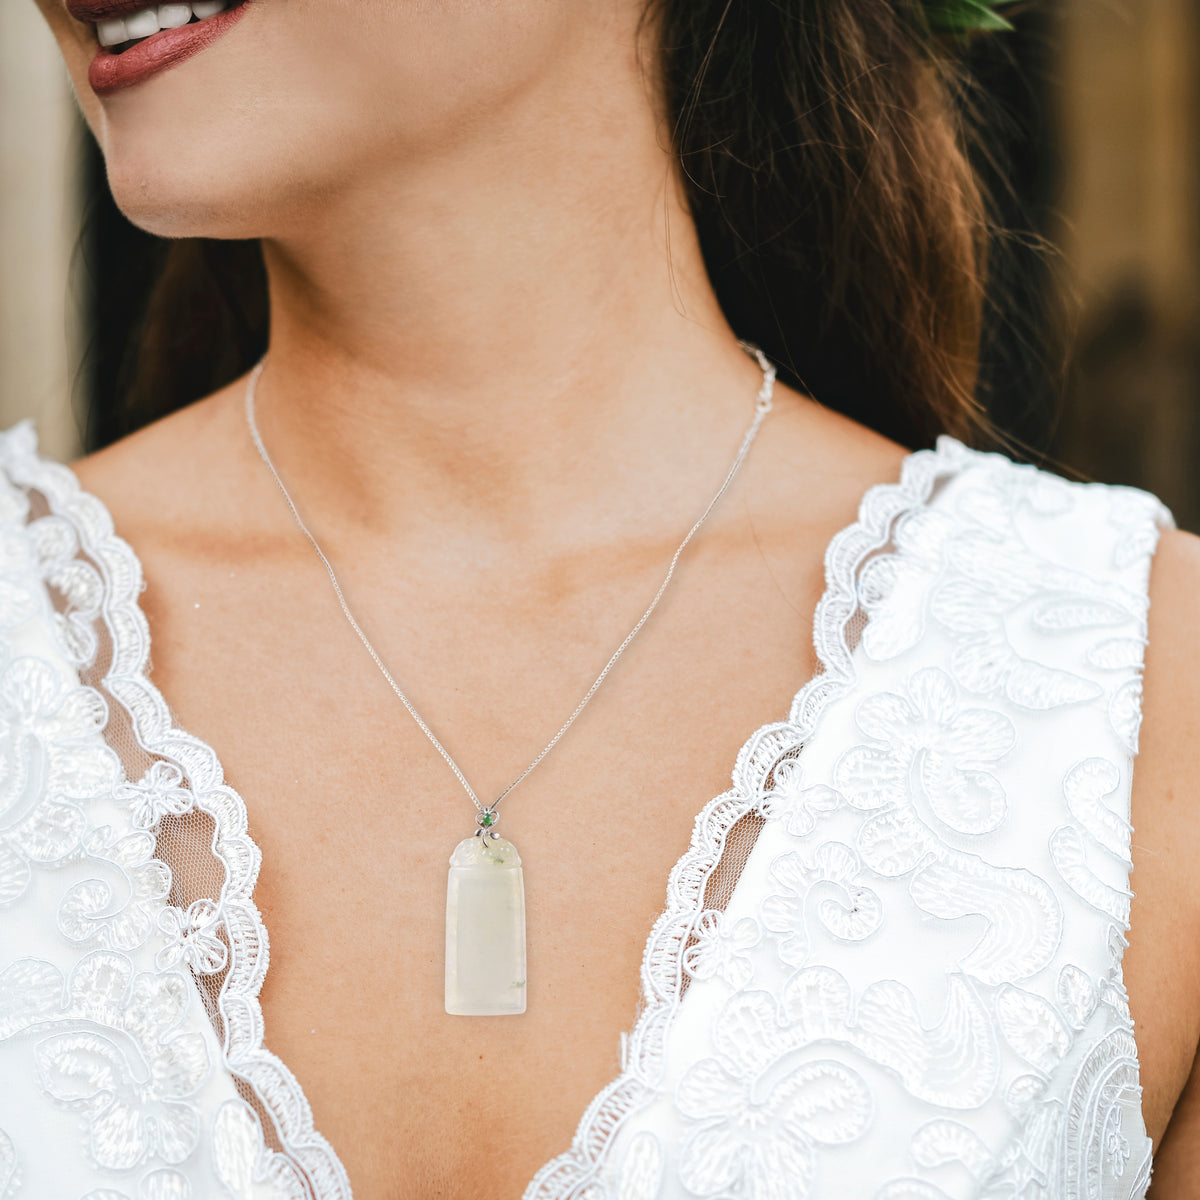 Woman wearing a white jade pendant